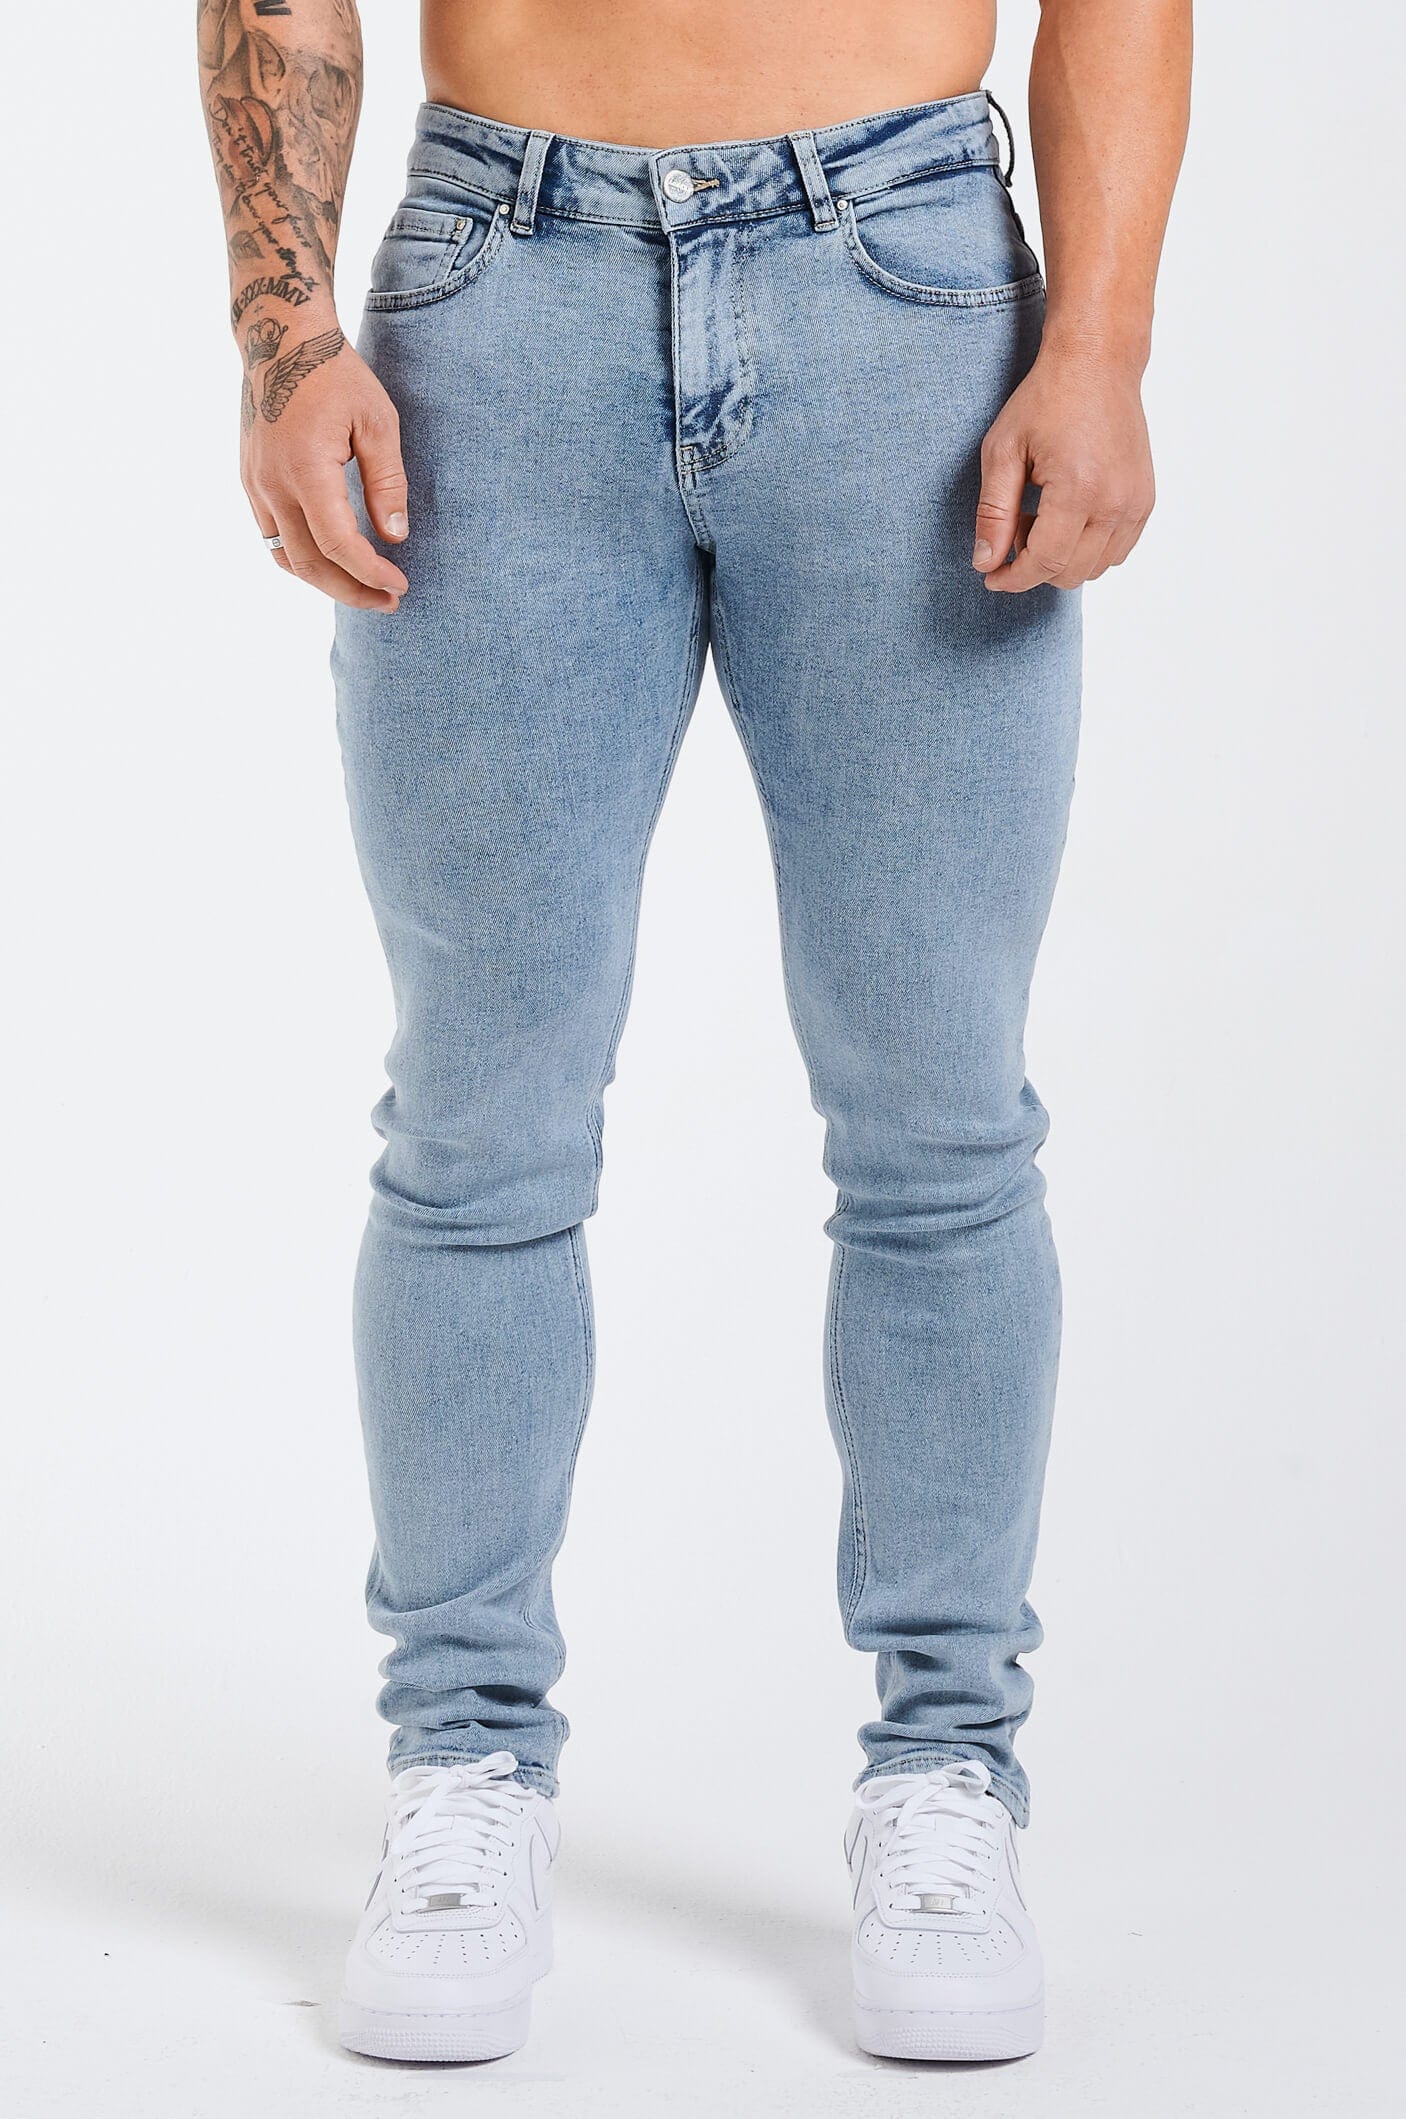 Legend London Jeans - slim 2.0 SLIM FIT JEANS 2.0 ACID 90s WASH